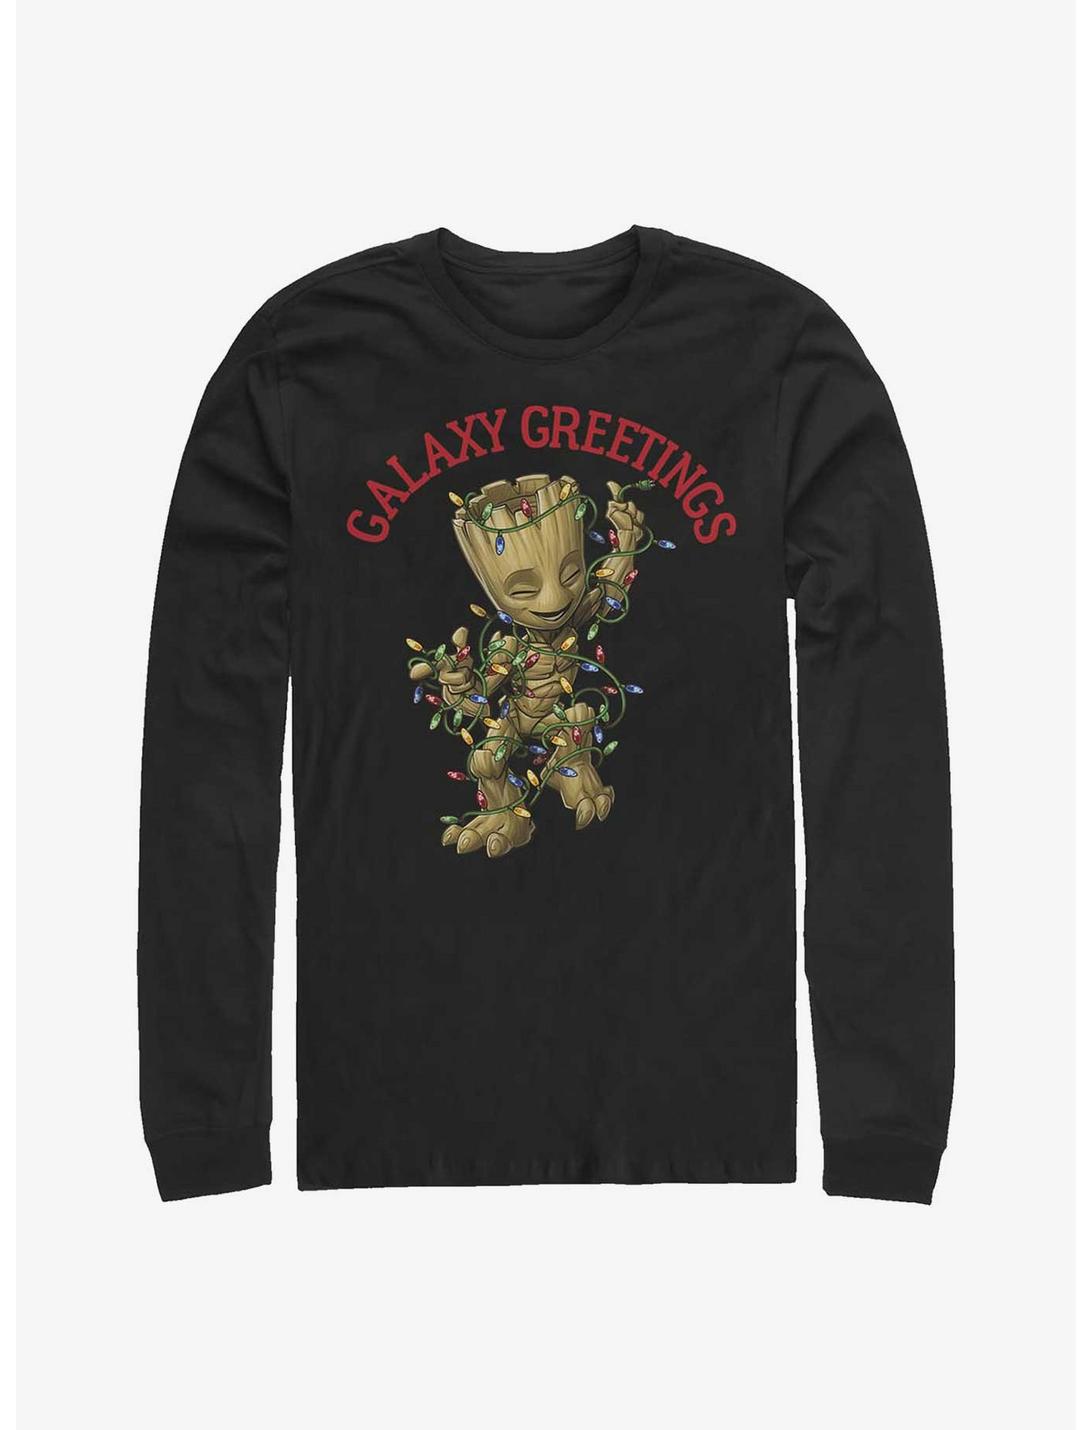 Marvel Guardians Of The Galaxy Baby Groot Galaxy Greetings Long-Sleeve T-Shirt, BLACK, hi-res